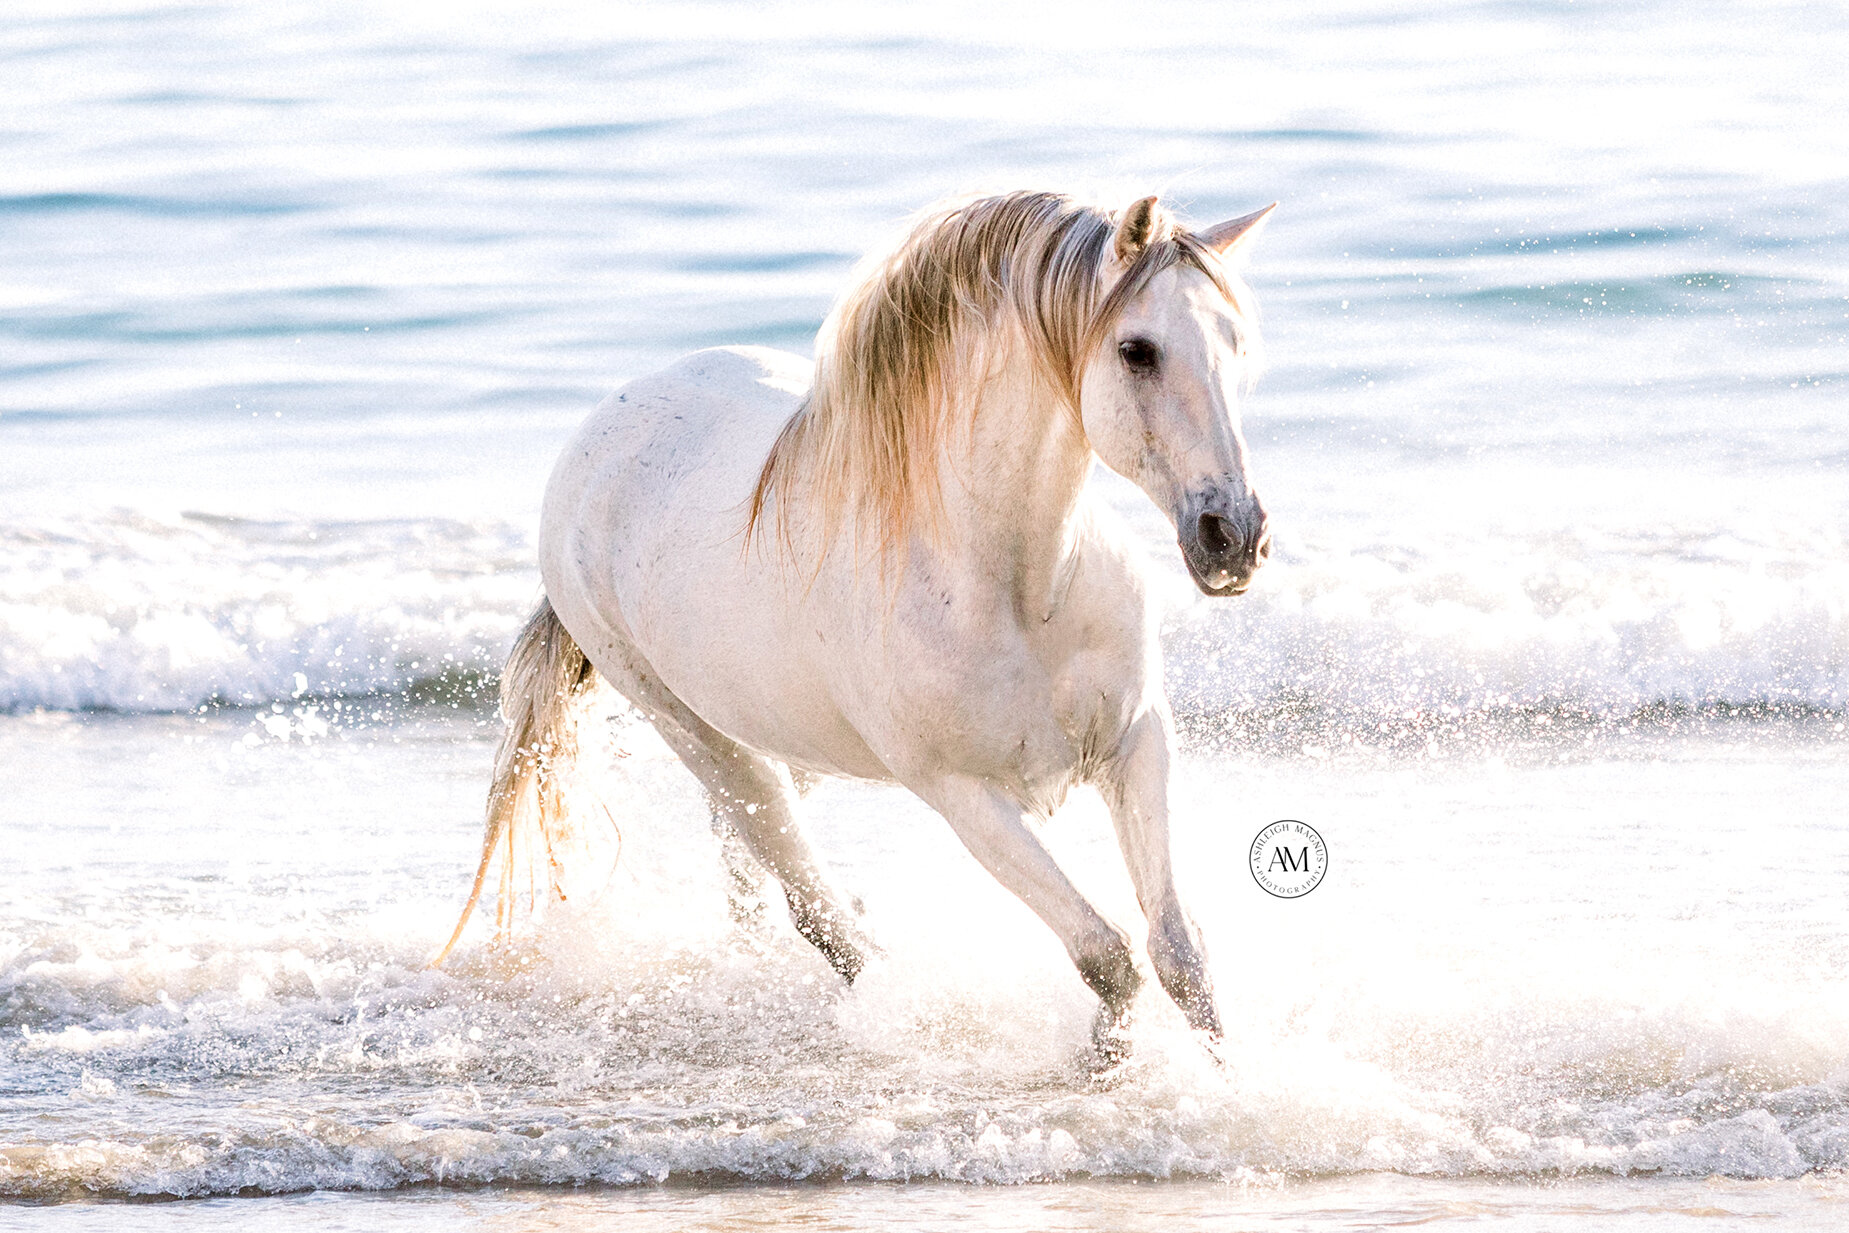 Gray horse splashing in the water